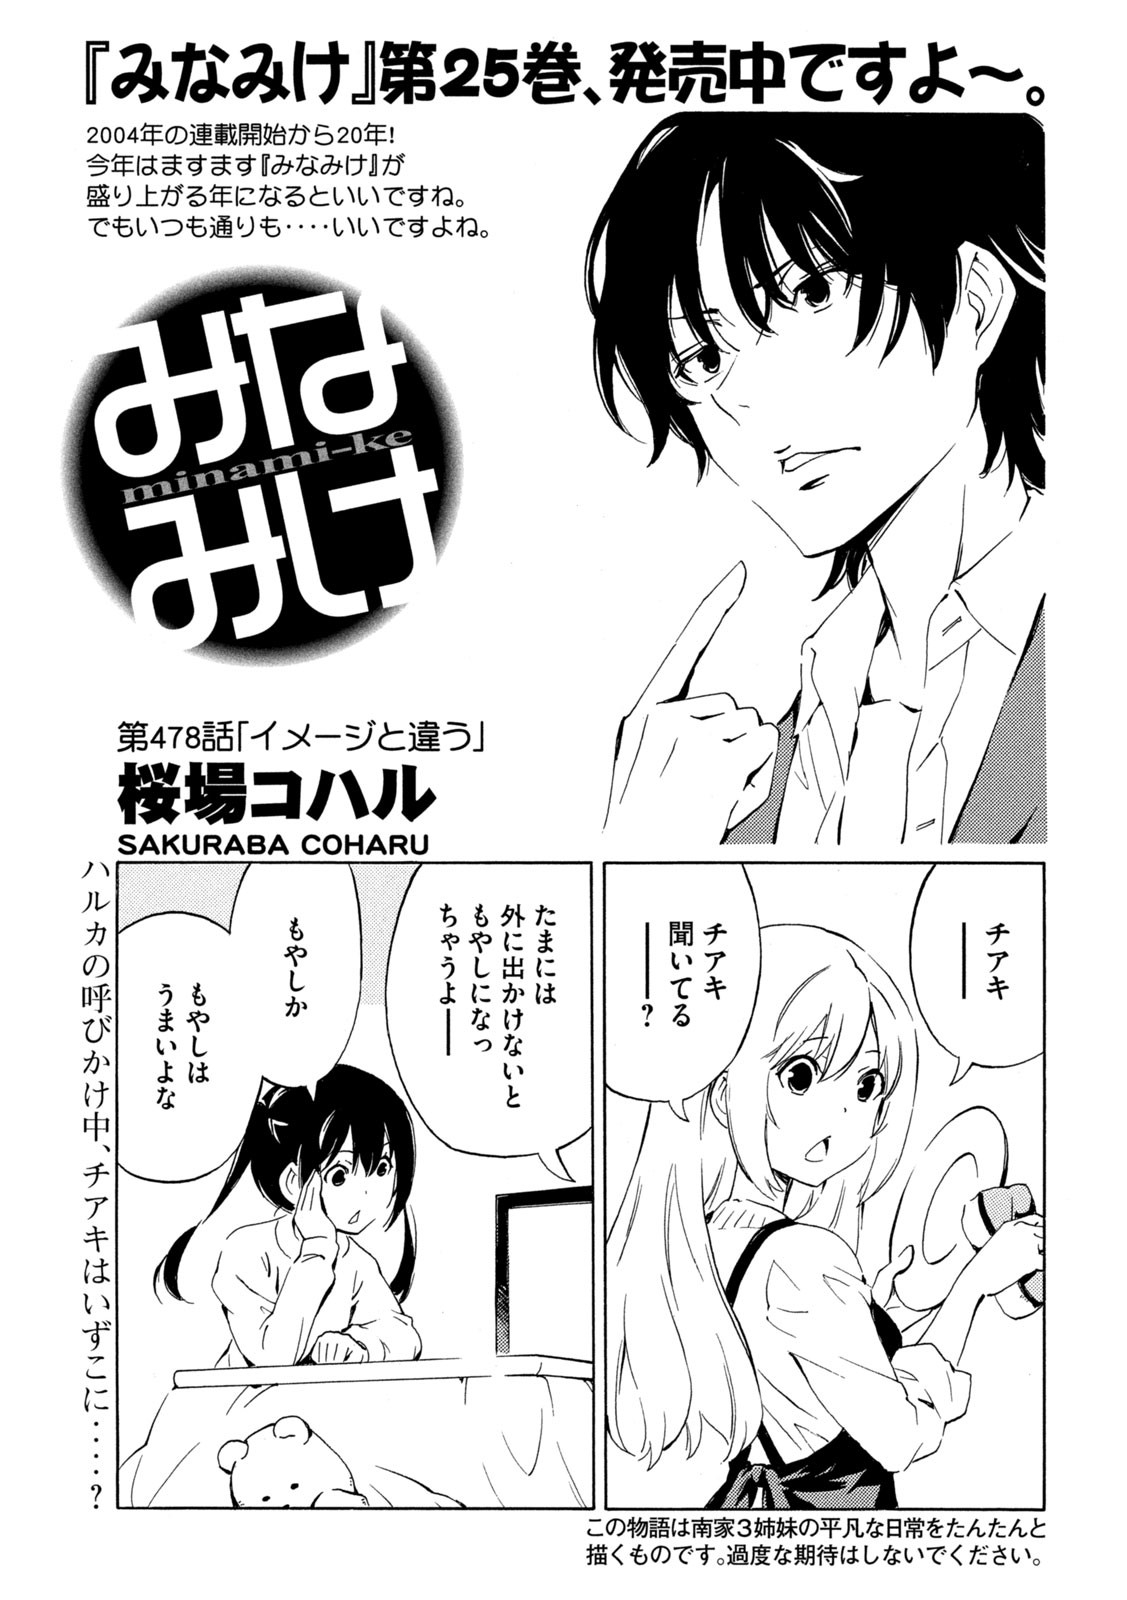 Minami-ke - Chapter 478 - Page 1